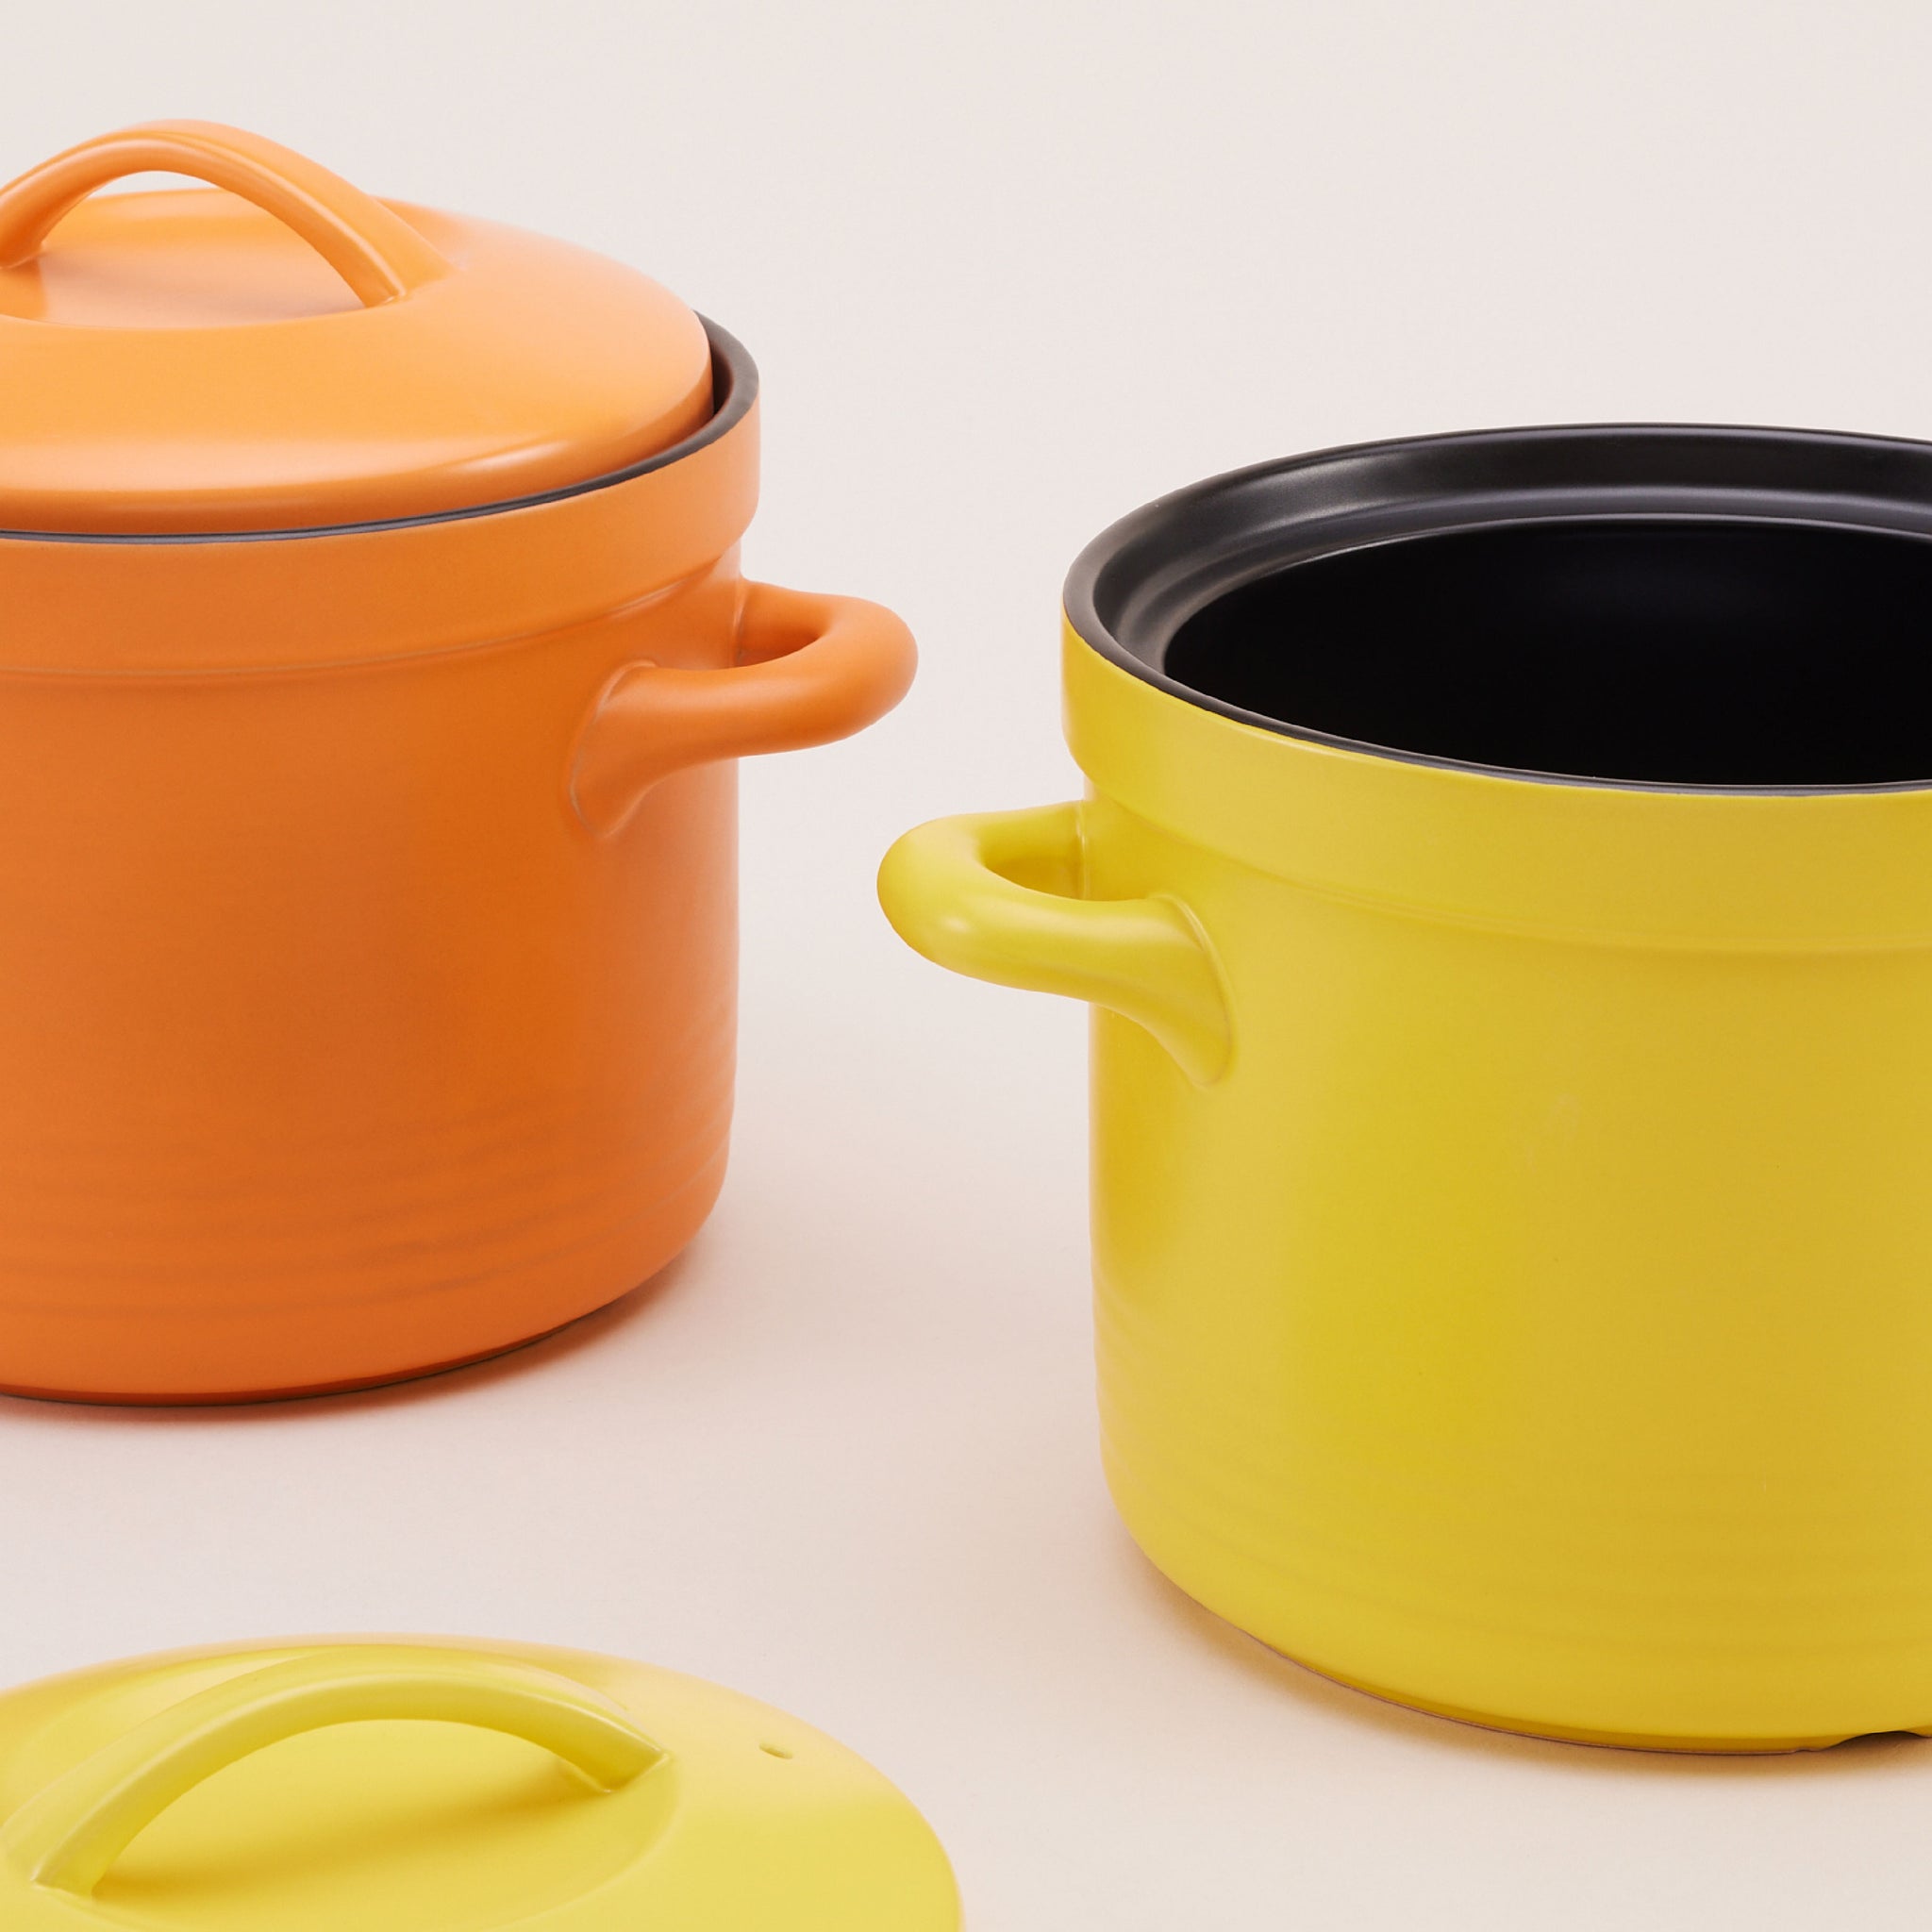 Ceramic Cooking Pot With Lid -5 Litre | หม้อพร้อมฝาปิด